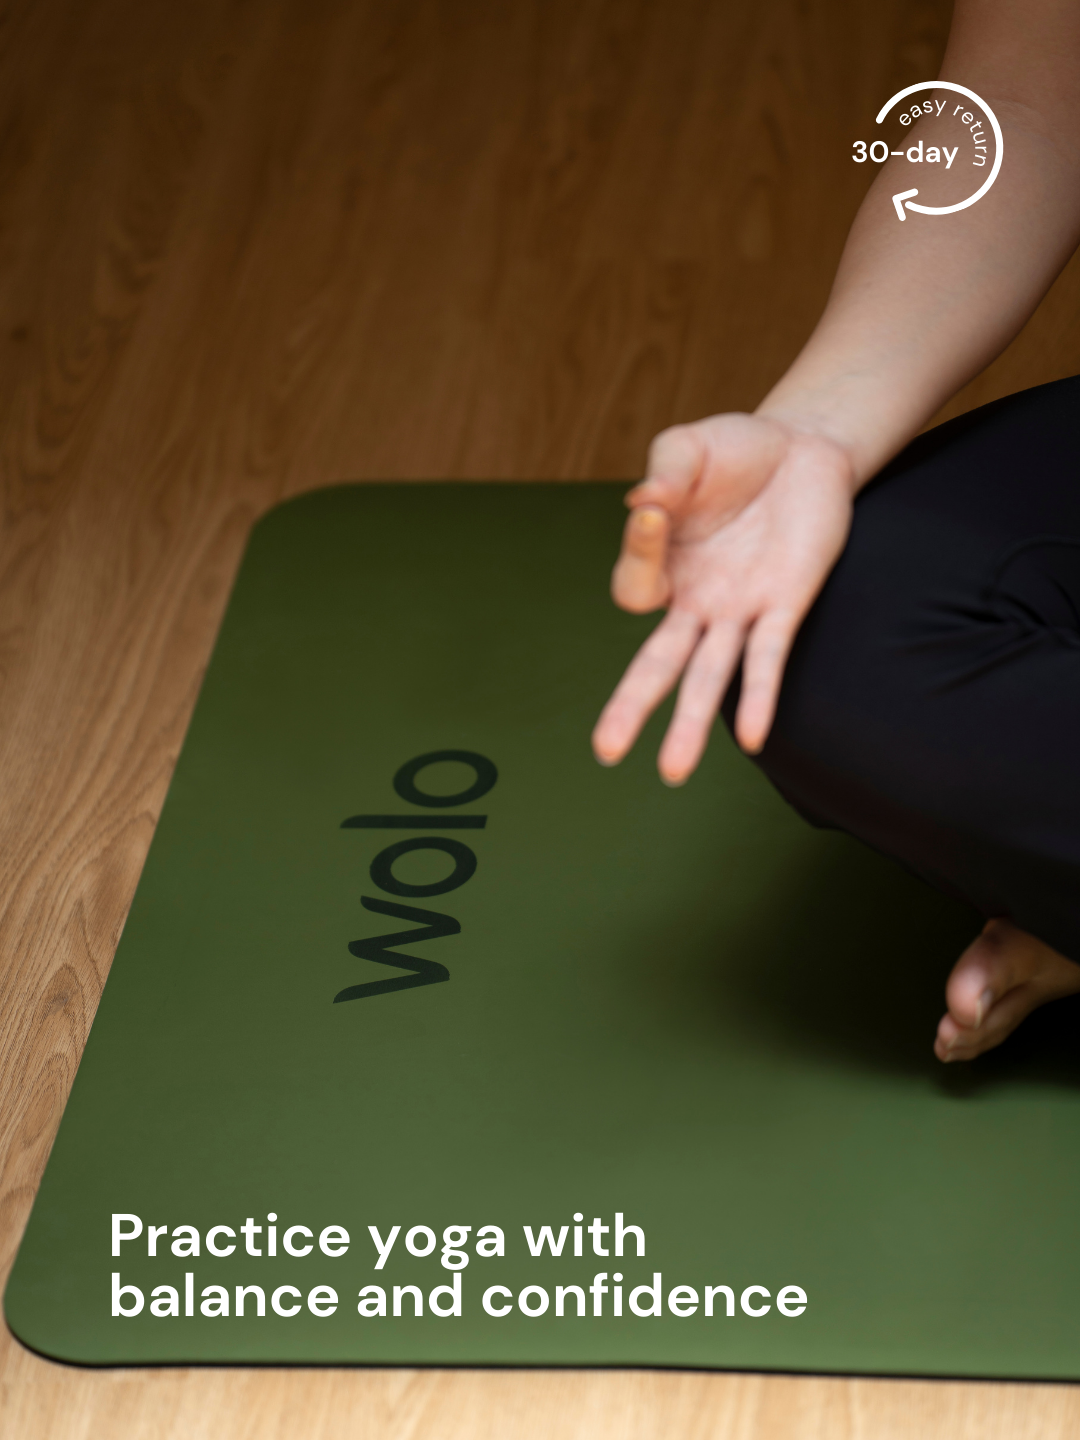 Lady meditate on a sage green yoga mat